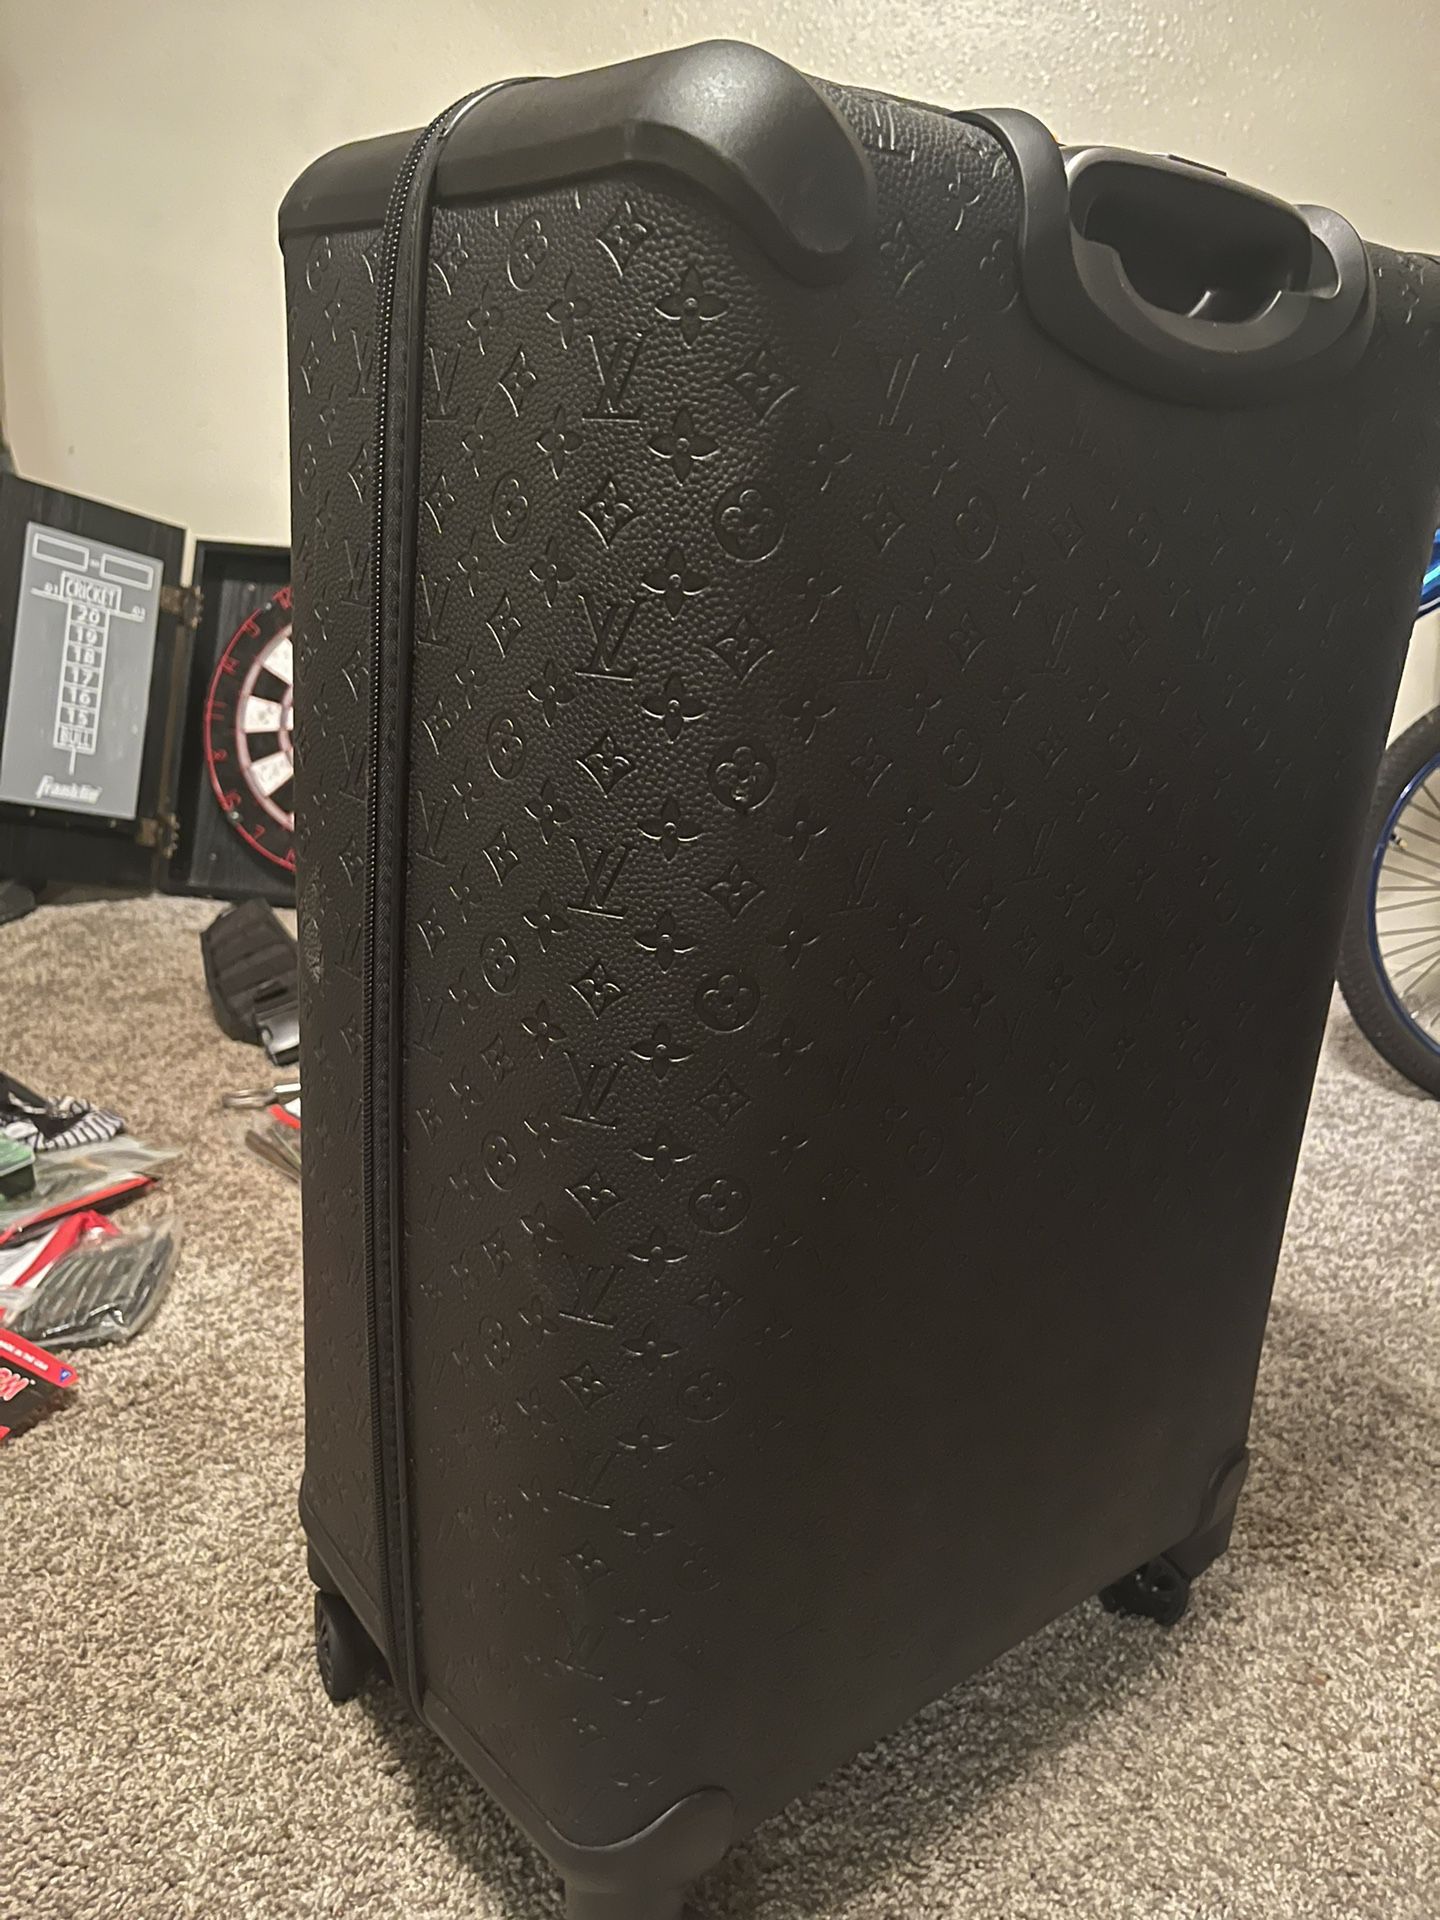 Louis Vuitton luggage bag, brand new